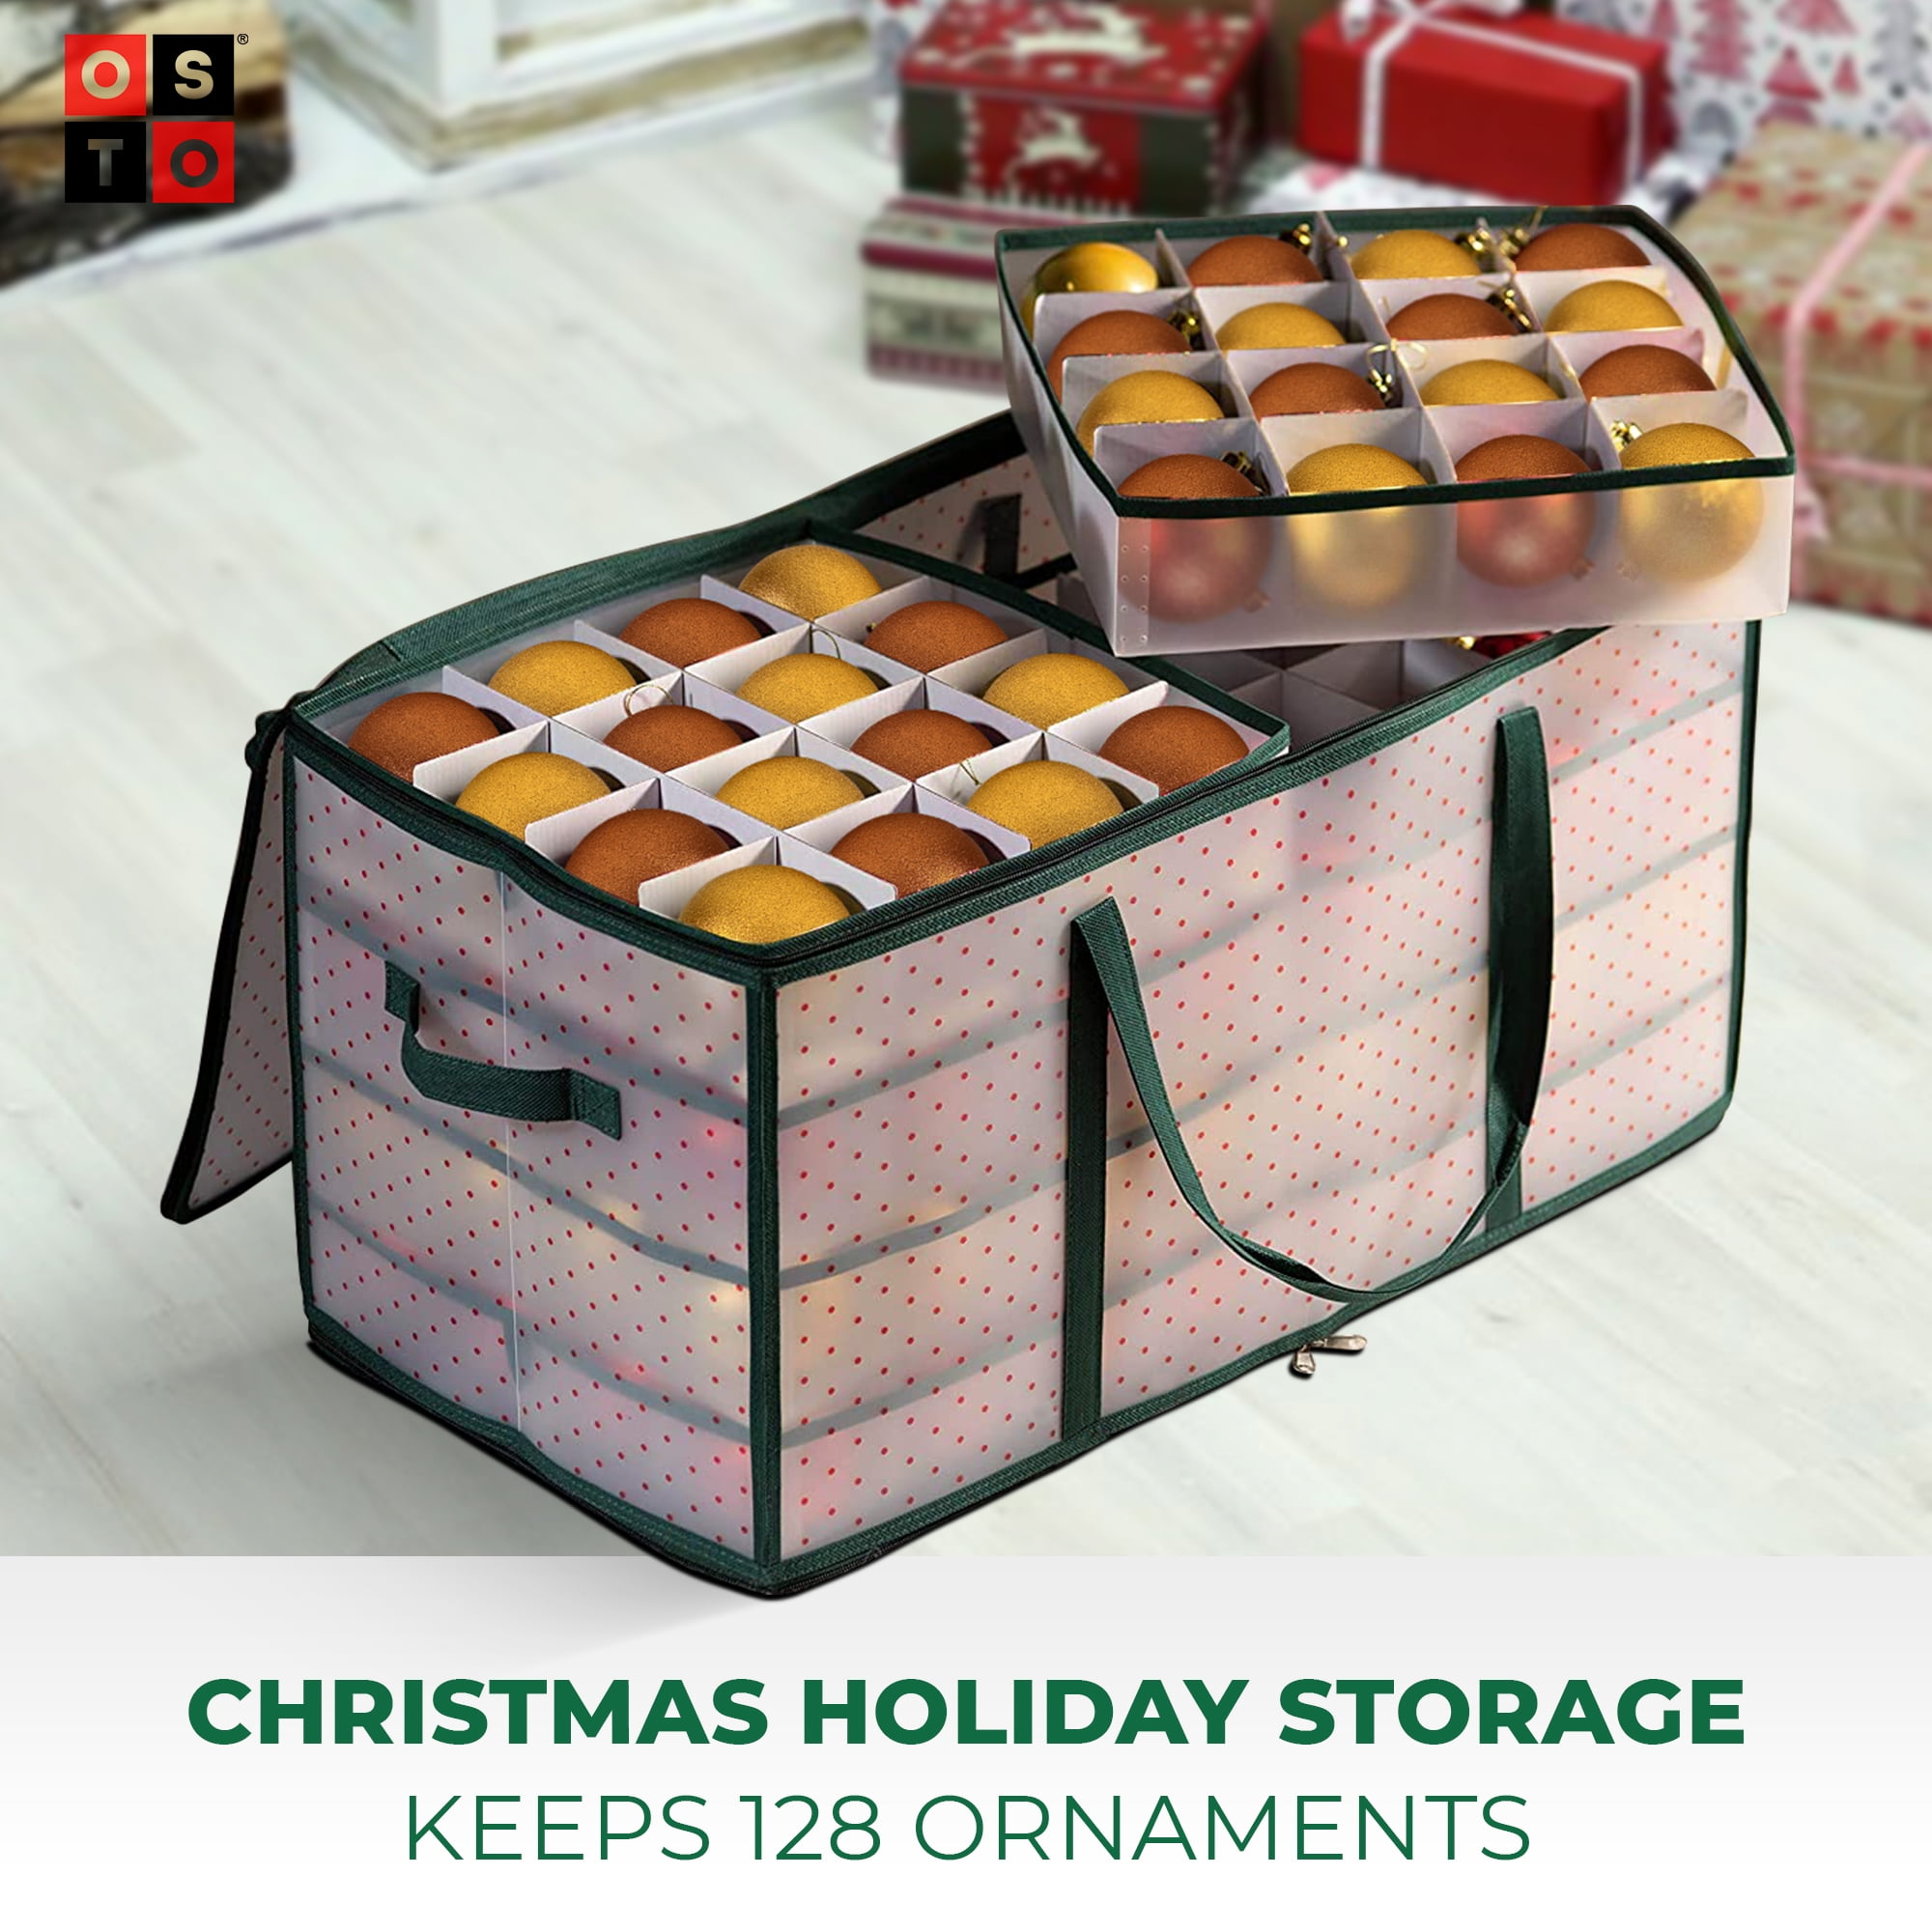  Huhumy 2 Pcs Christmas Ornament Storage Box with Lid